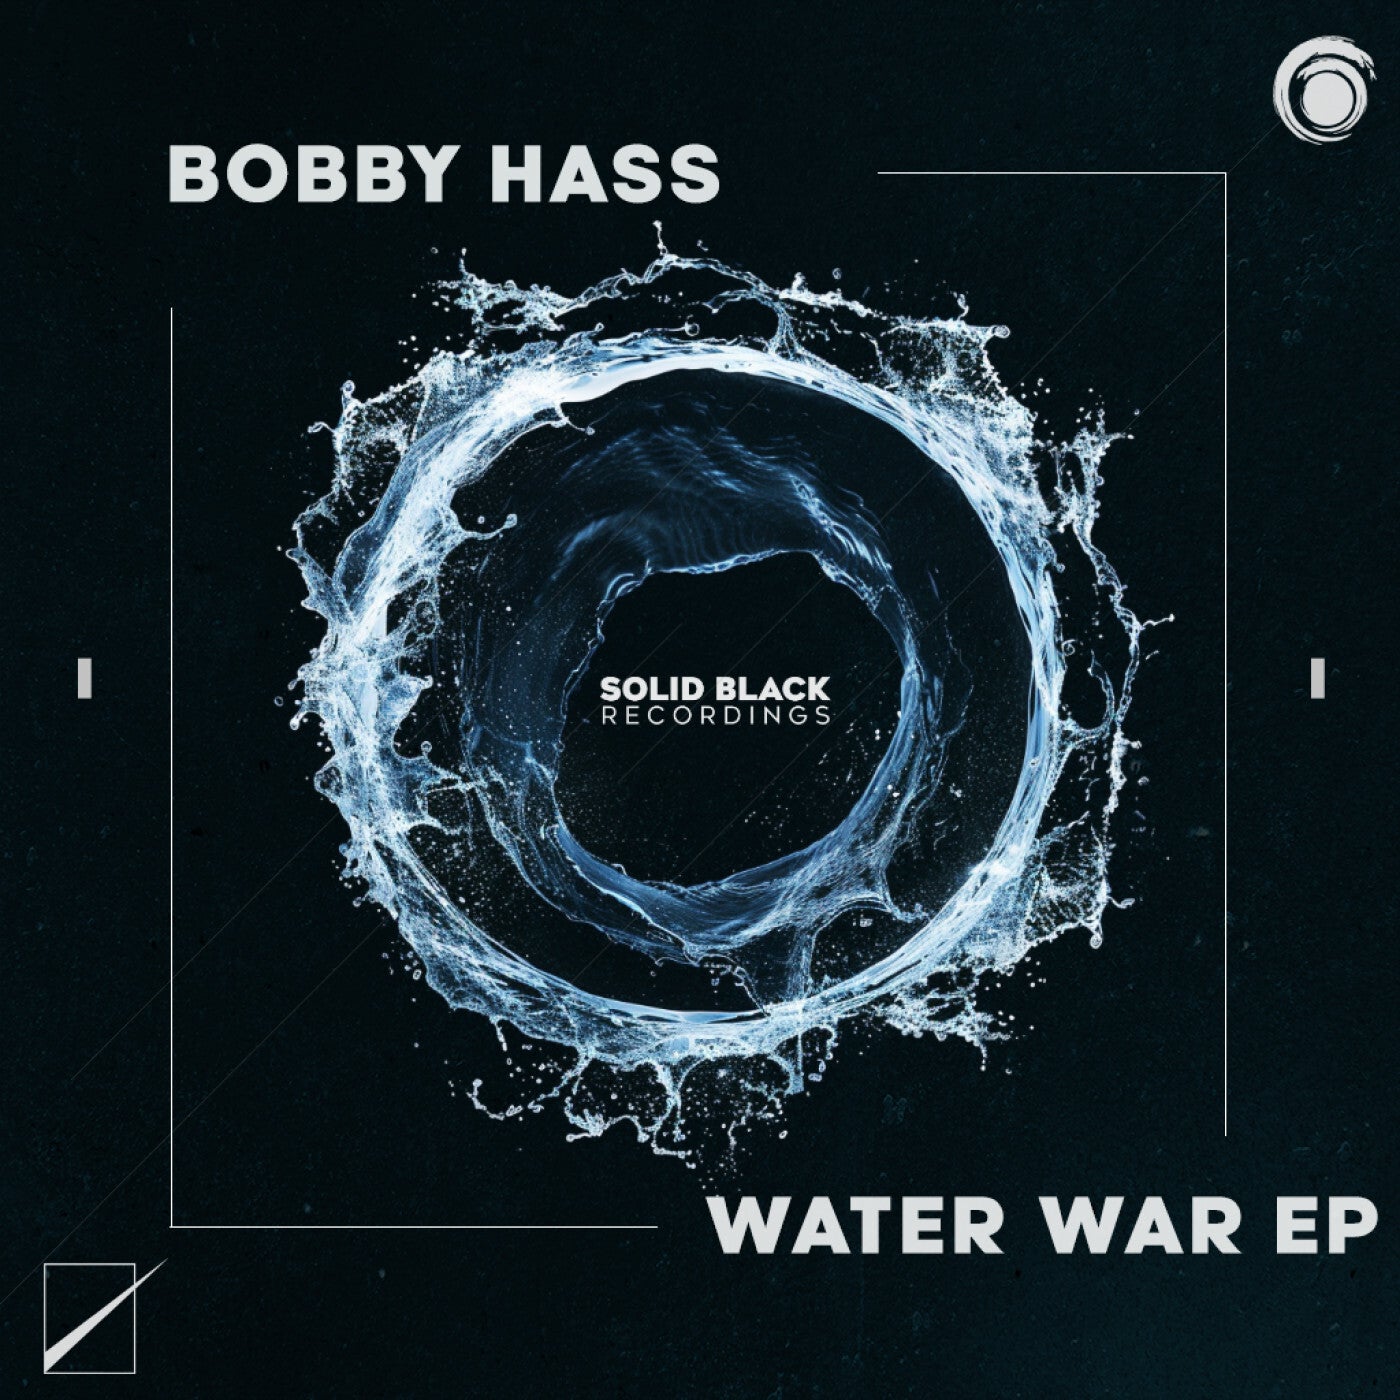 Water War EP